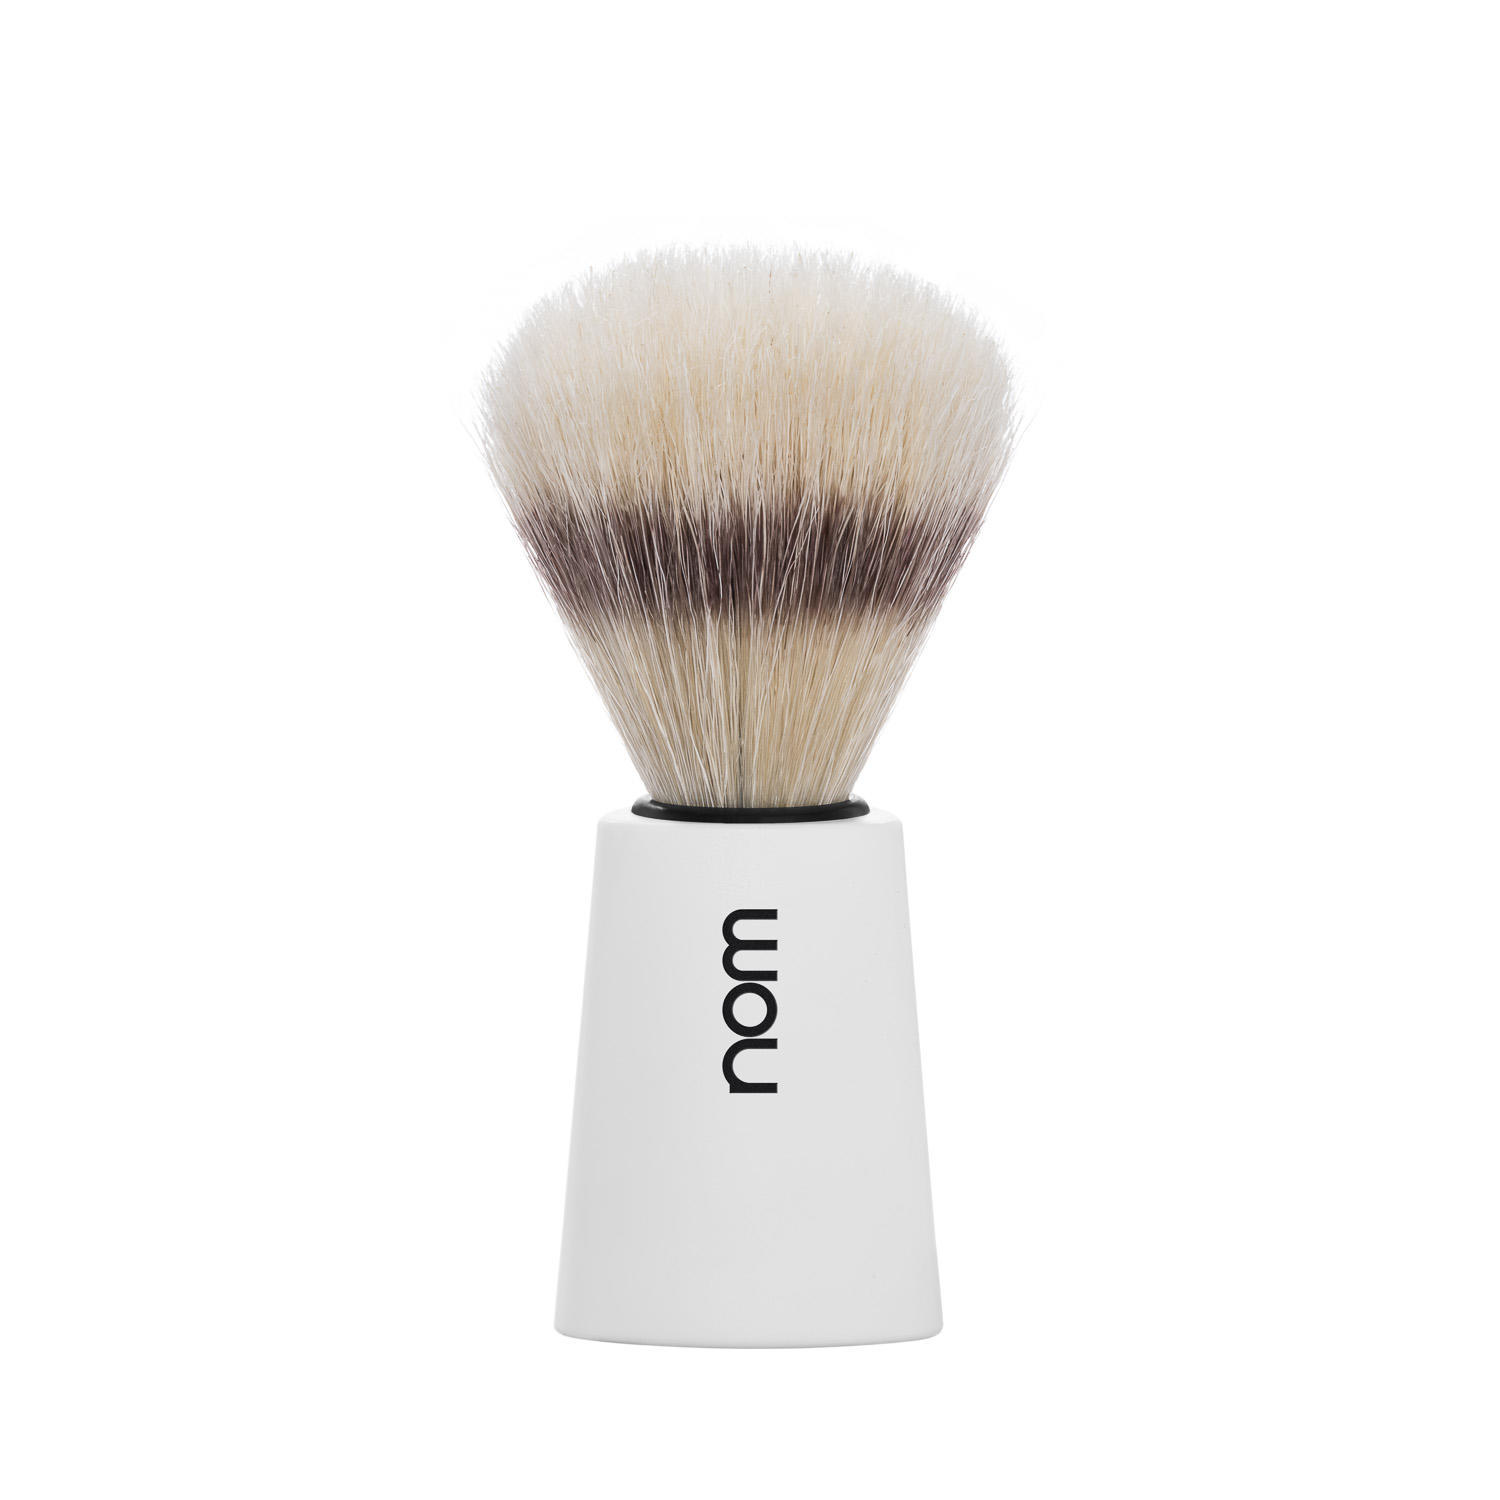 CARL41WH NOM, CARL white, pure bristle shaving brush